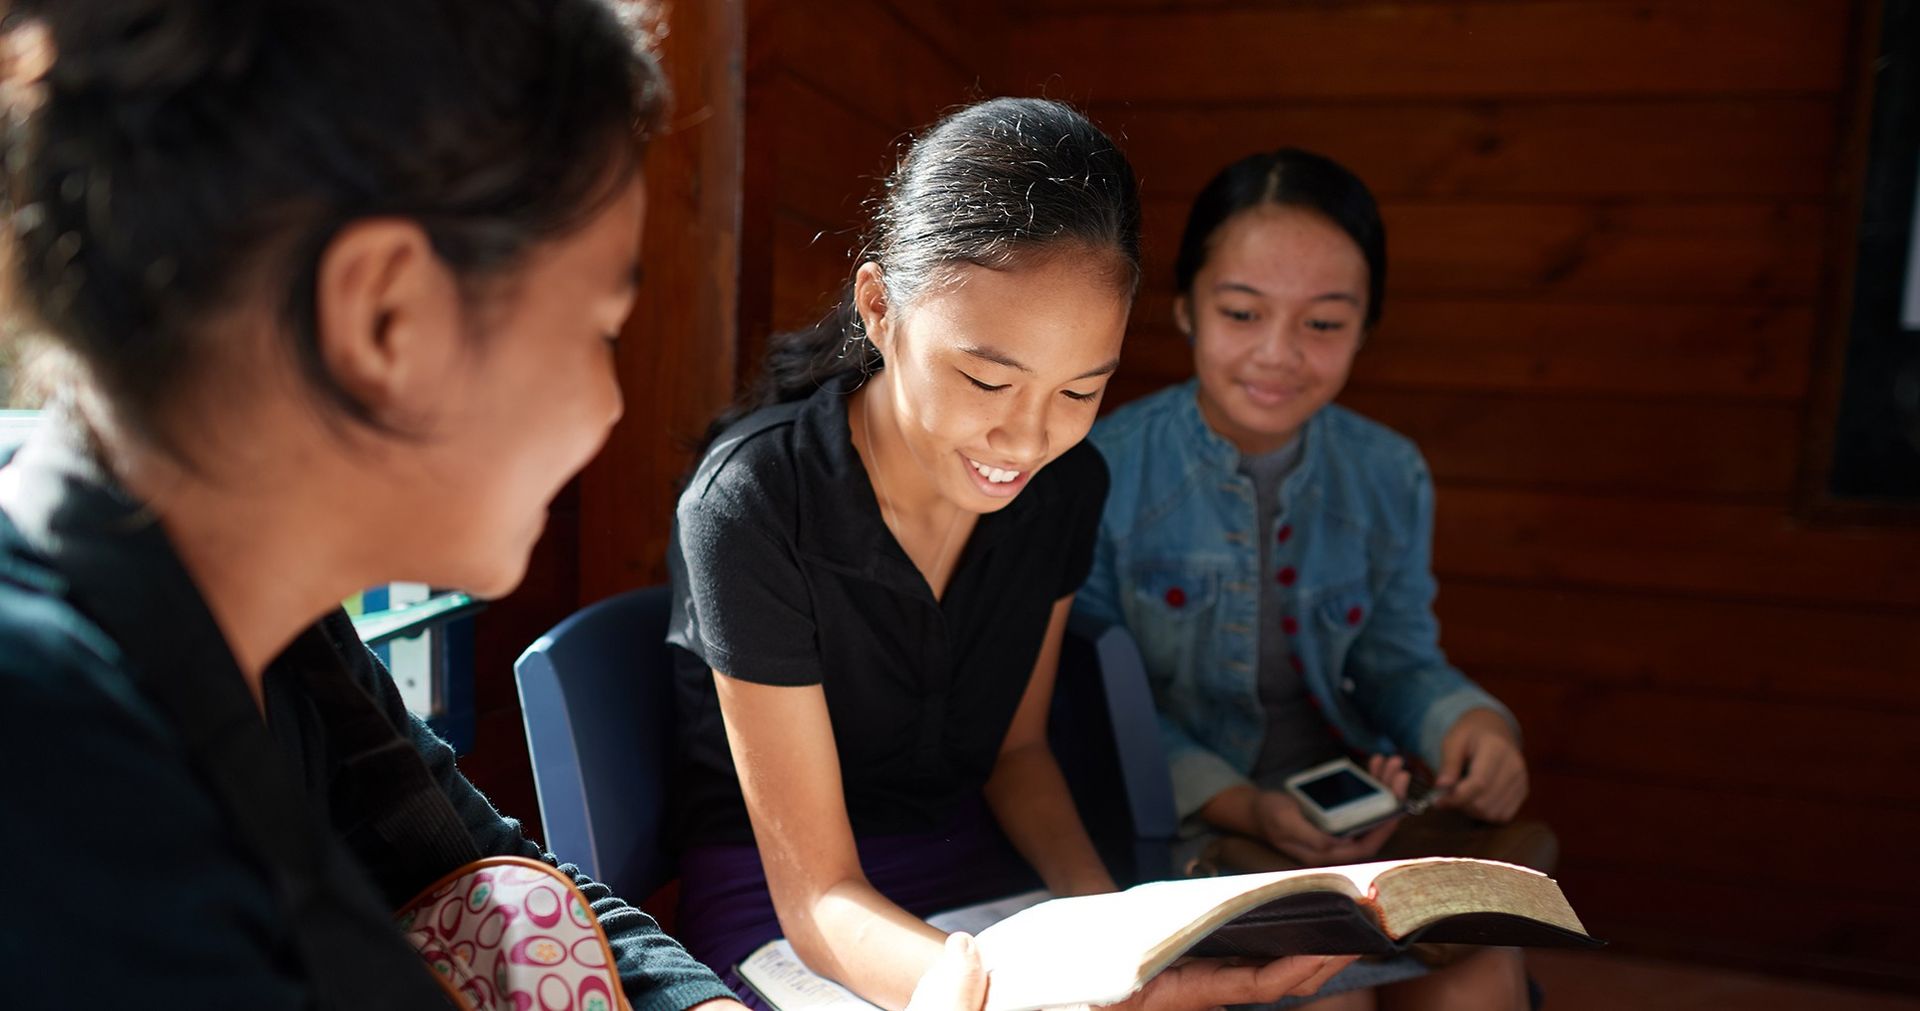 Samoan children reading scriptures in a Sunday School class.